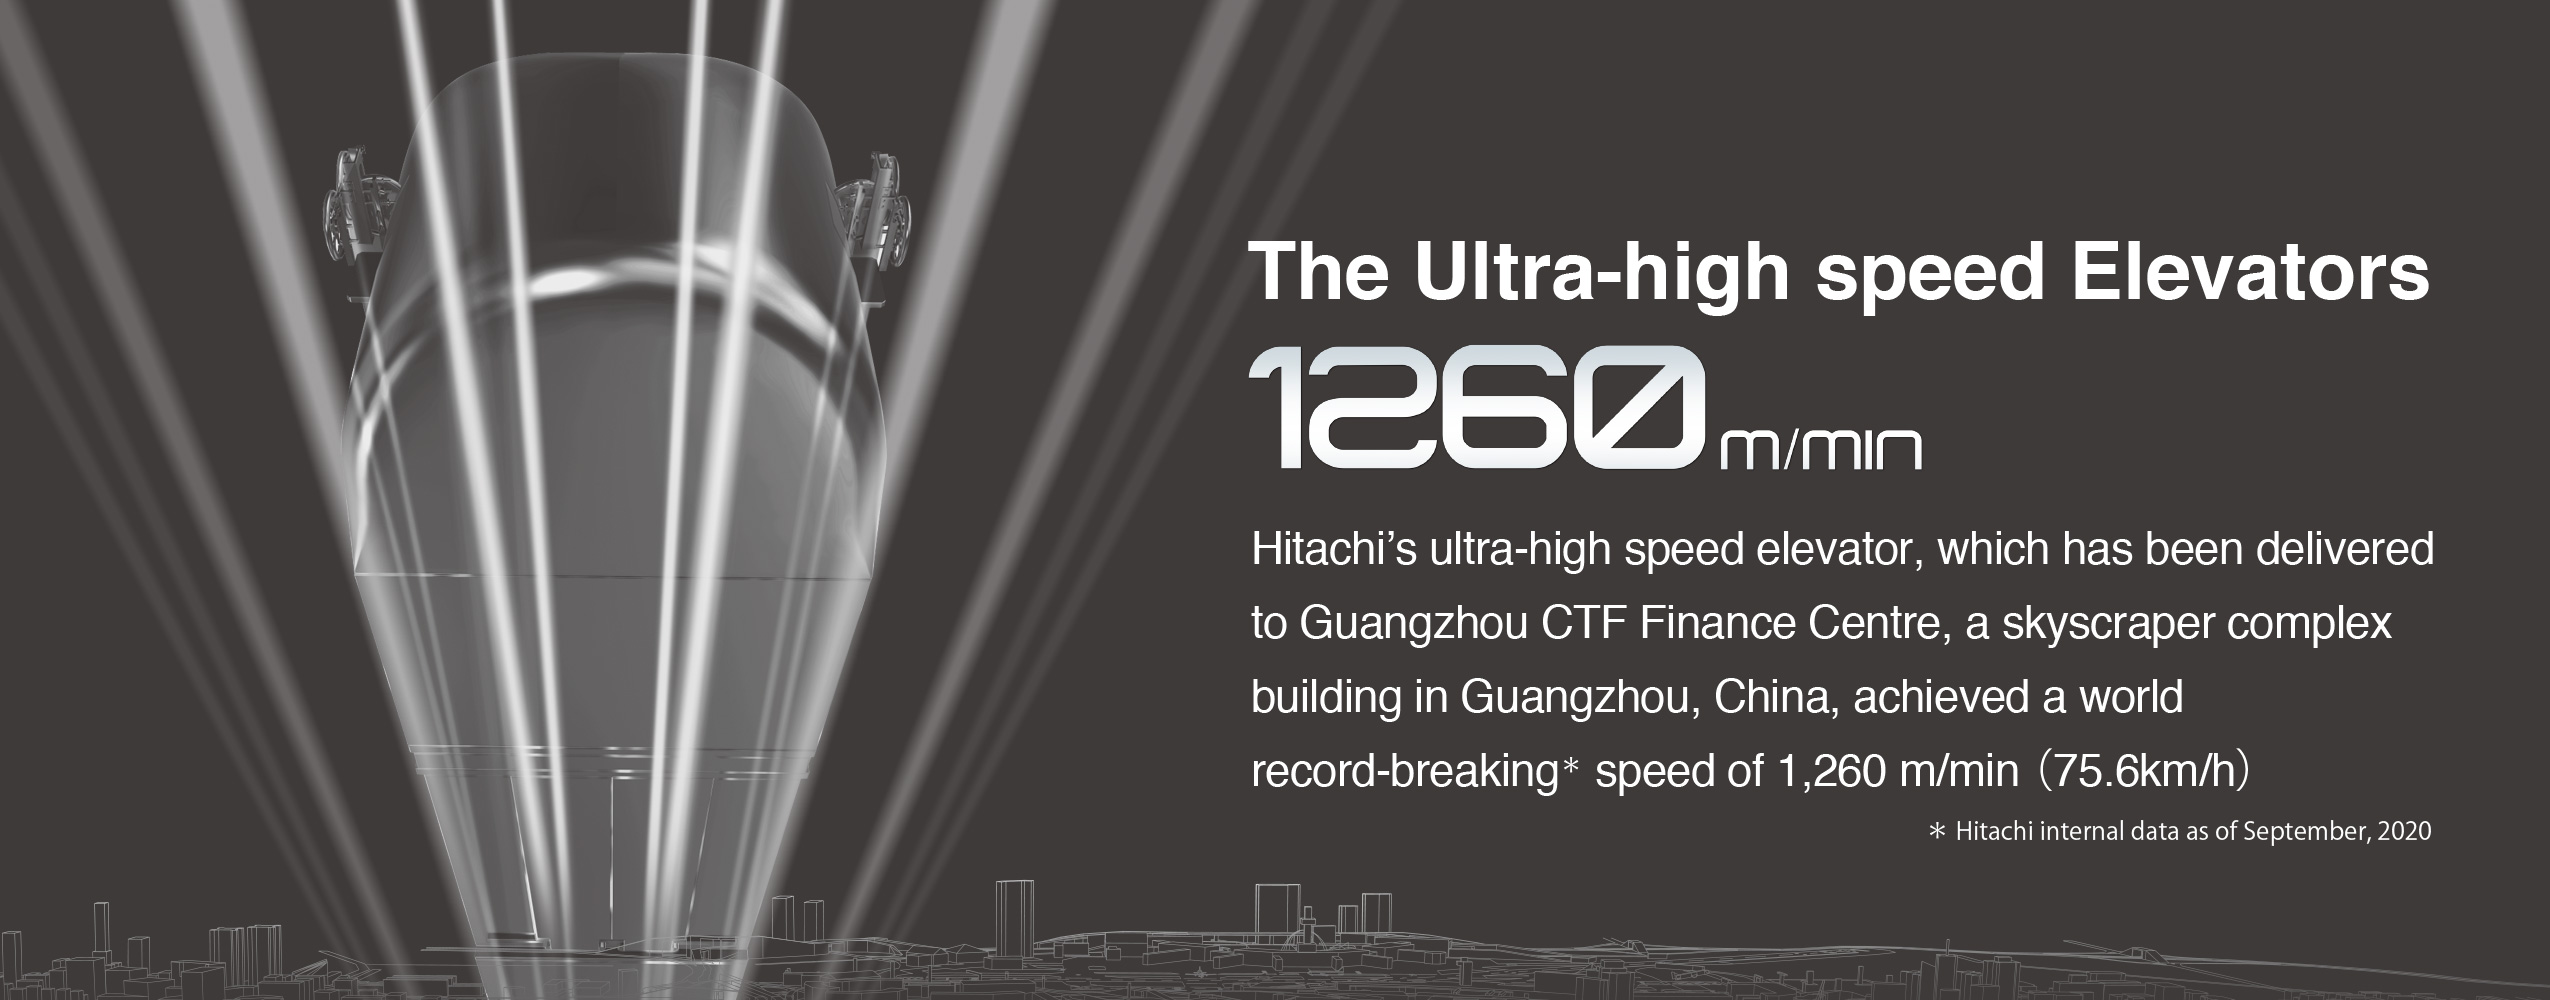 The Ultra-high speed Elevators 1260 m/min Hitachi's ultra-high speed elevator, which has been delivered to Guangzhou CTF Finance Centre, a skyscraper complex building in Guangzhou, China, achieved a world record-breaking* speed of 1,260 m/min (75.6km/h) * Hitachi internal data as of September, 2020 Advanced Technologies